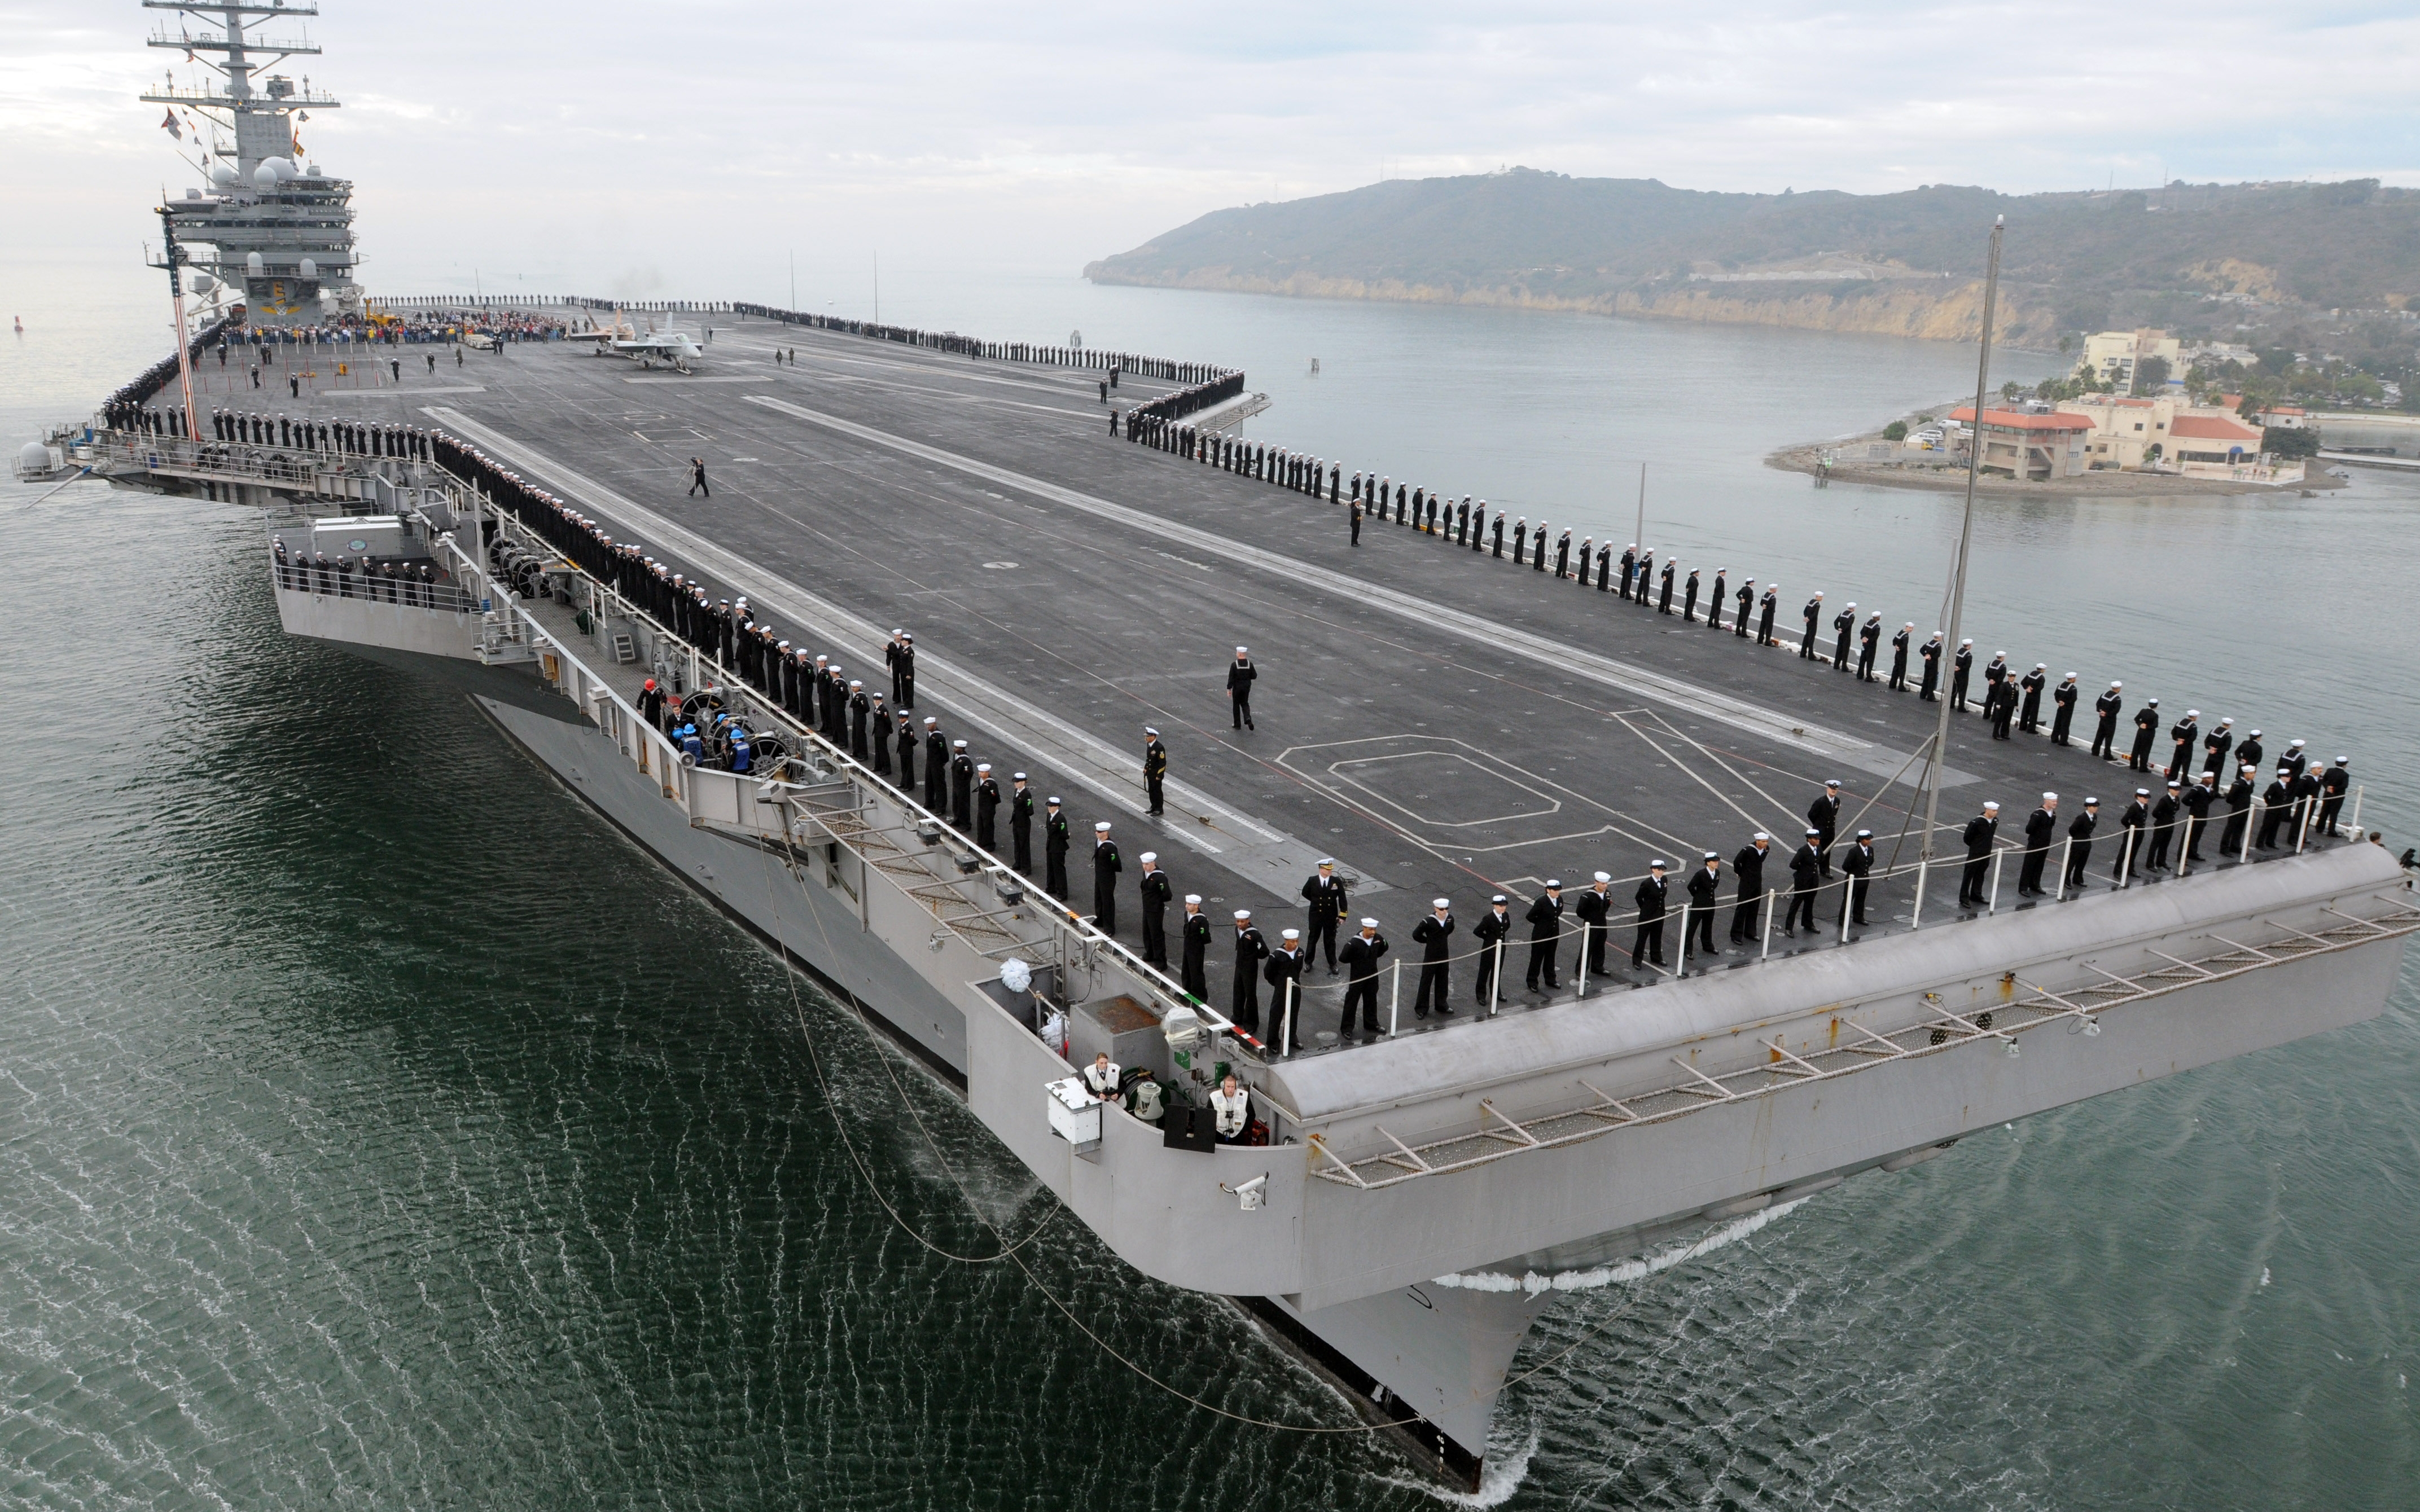 warship, military, uss ronald reagan (cvn 76), aircraft carrier, warships